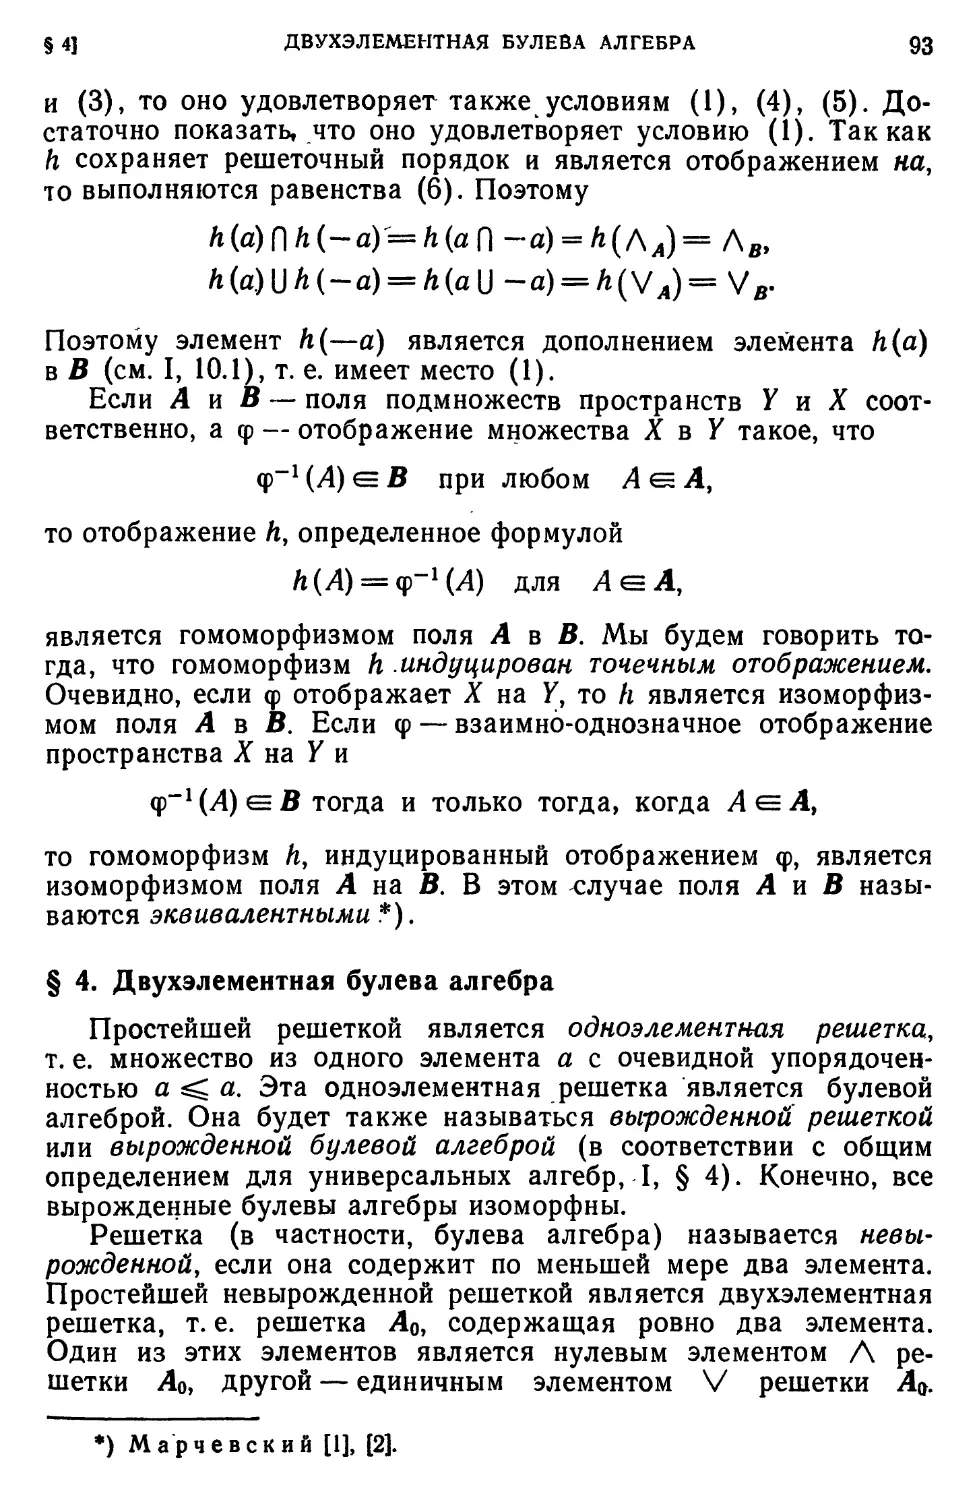 § 4. Двухэлементная булева алгебра